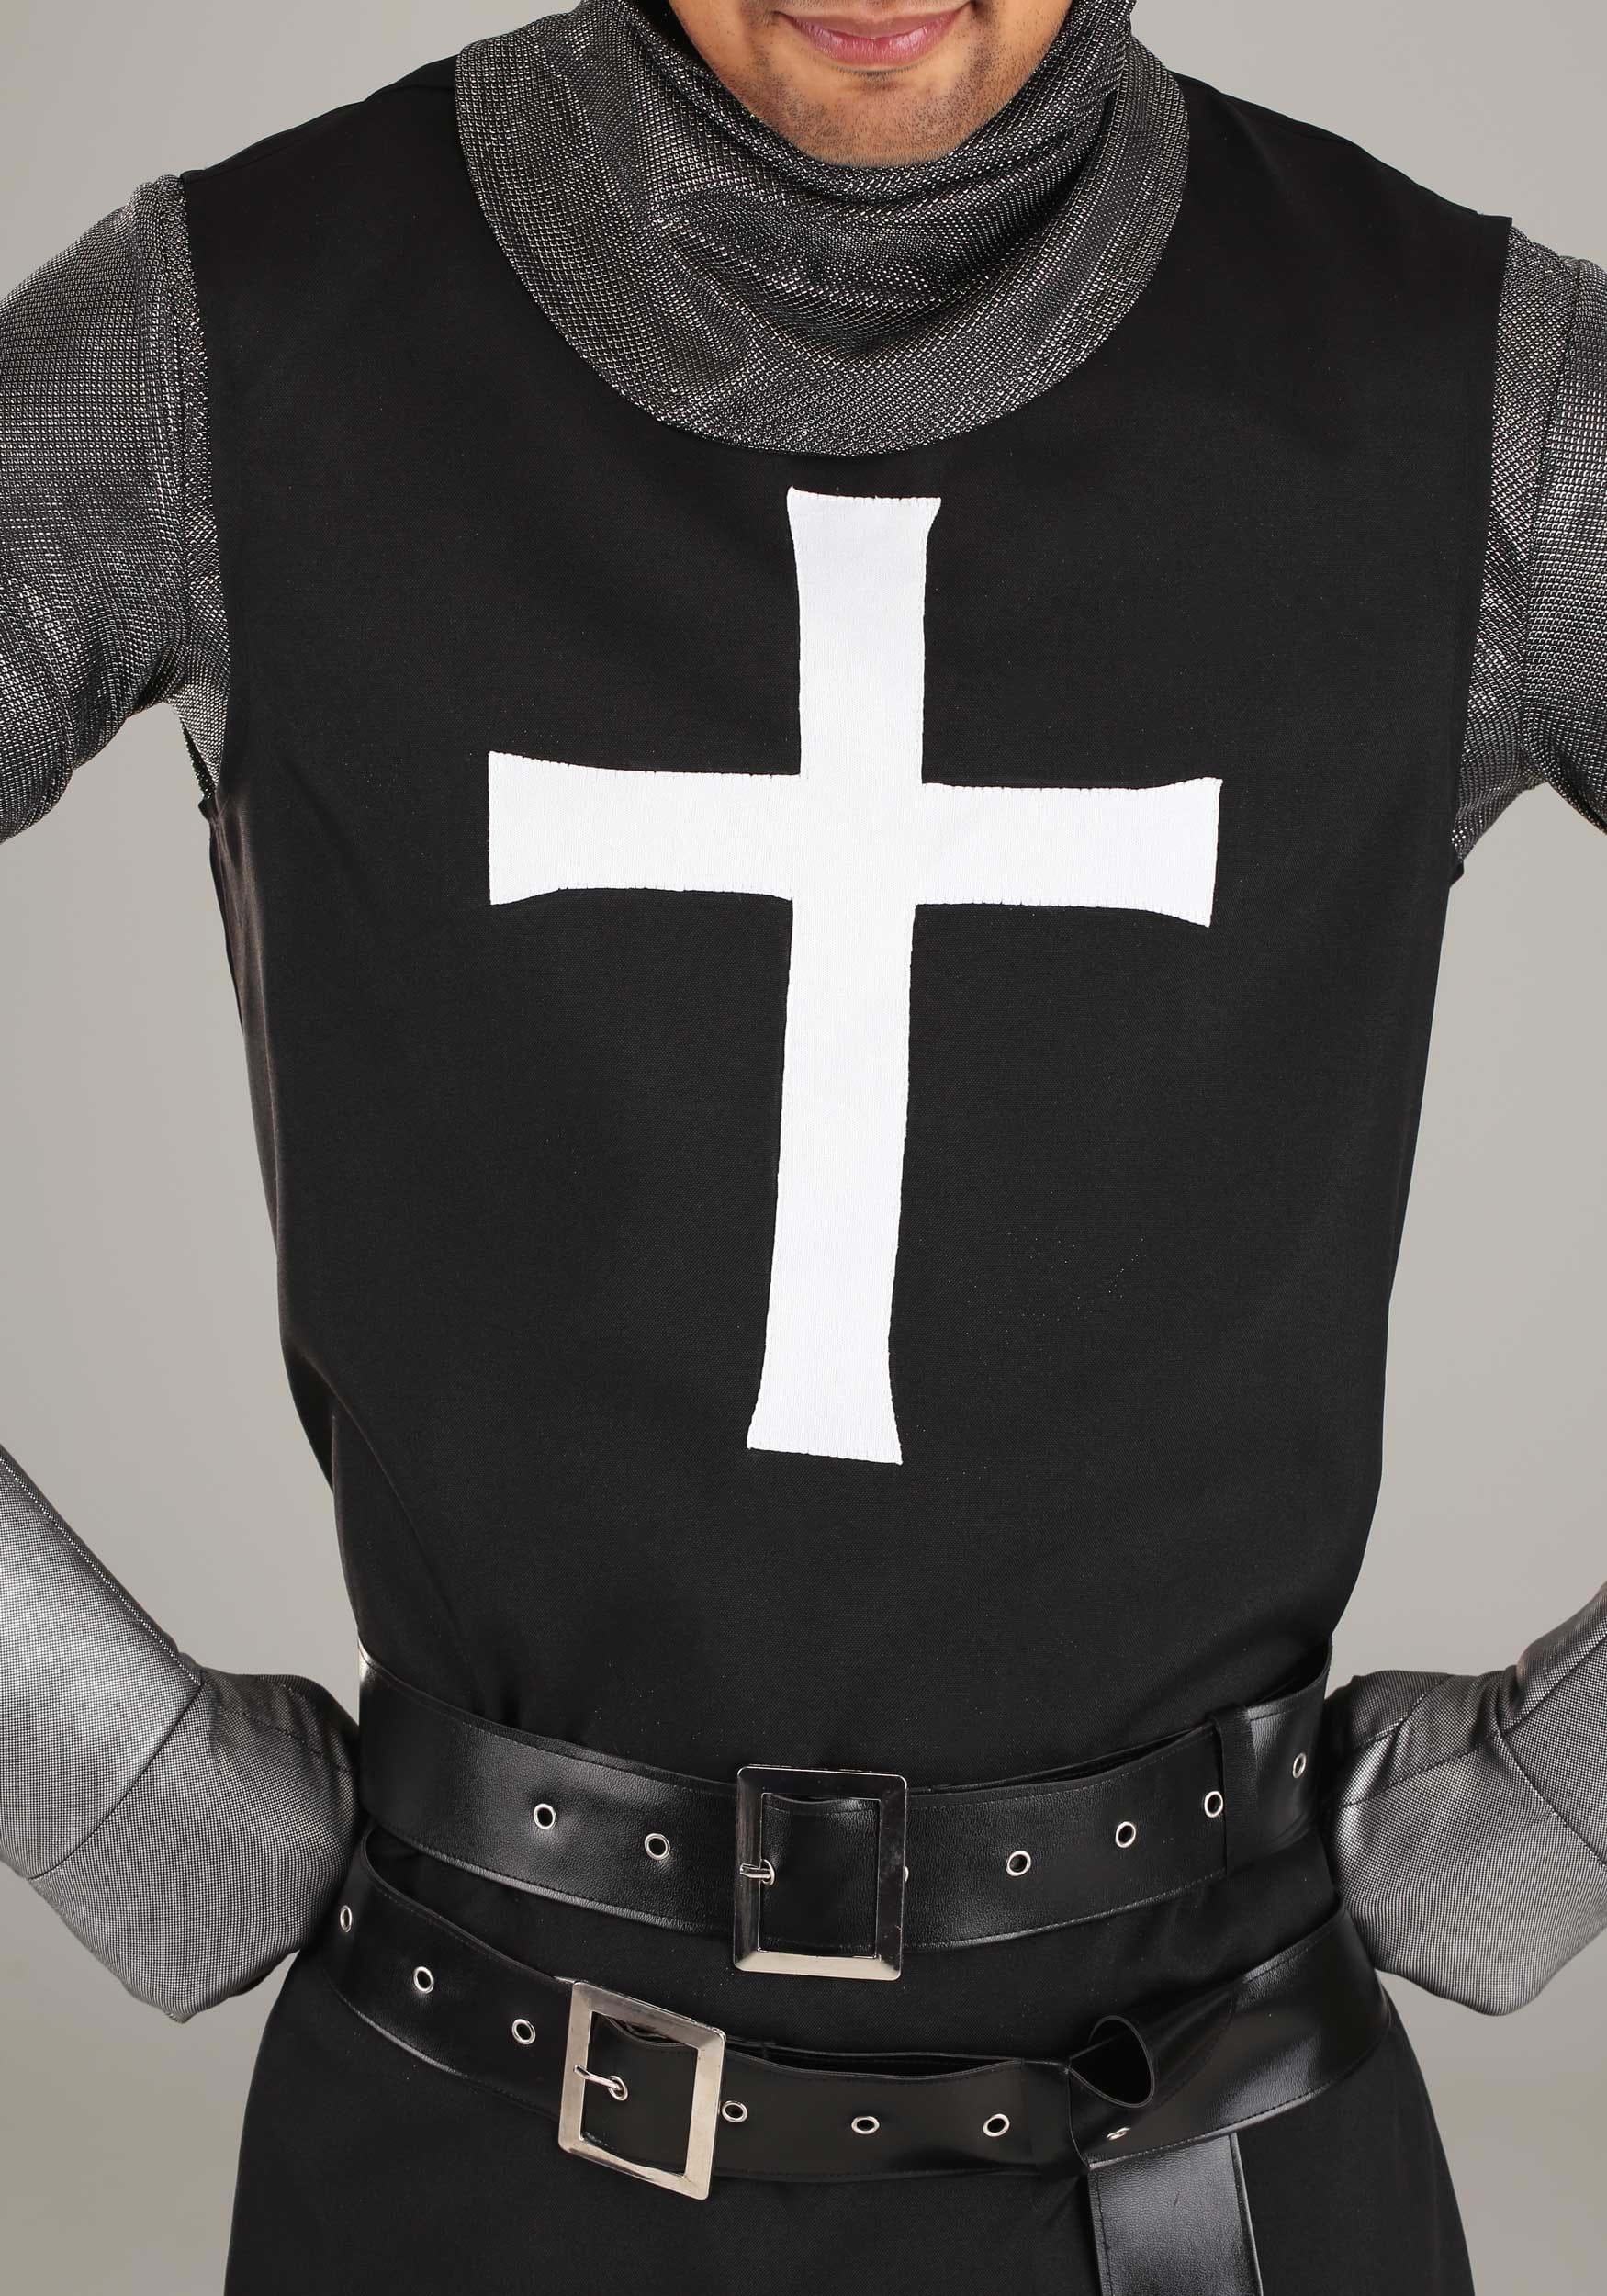 Exclusive Men's Dark Crusader Costume